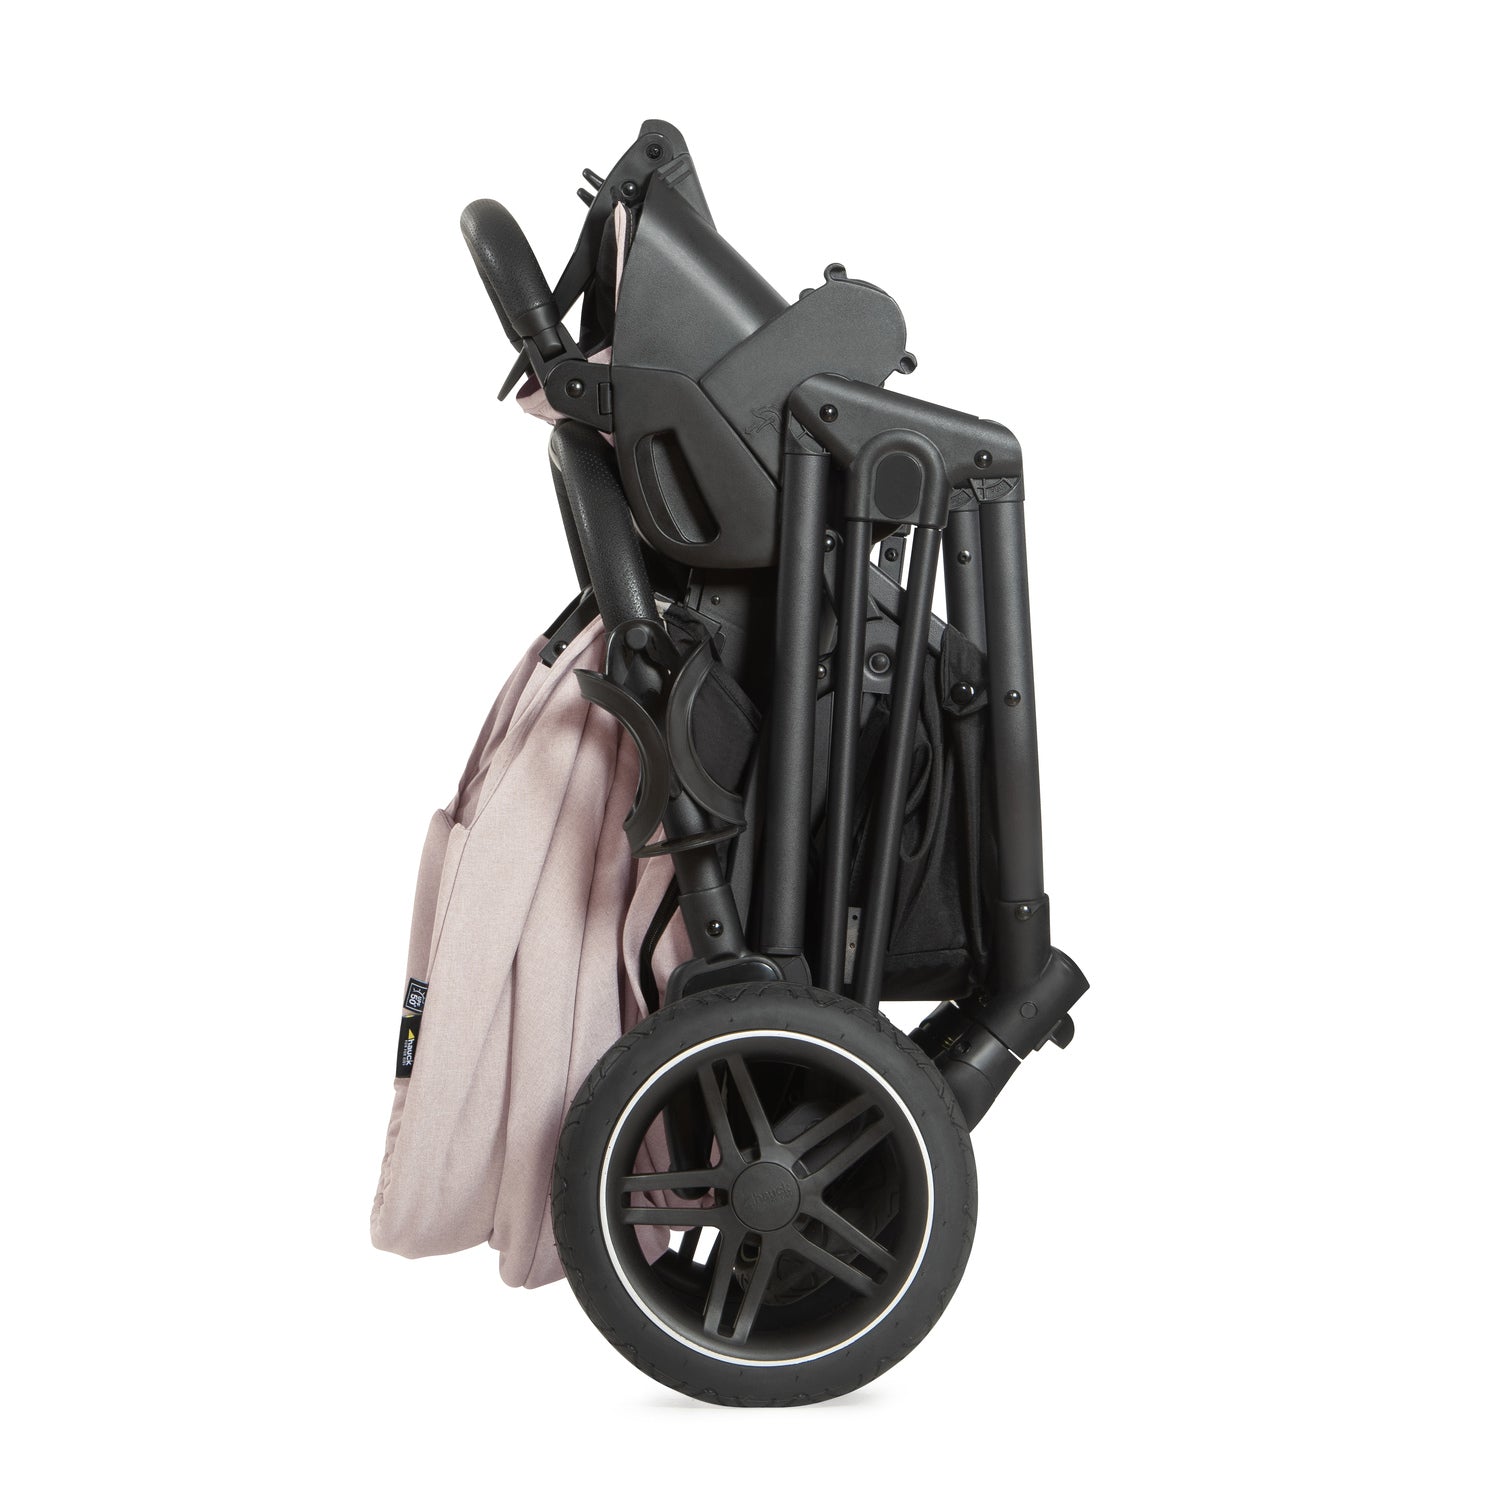 hauck vision x stroller folded